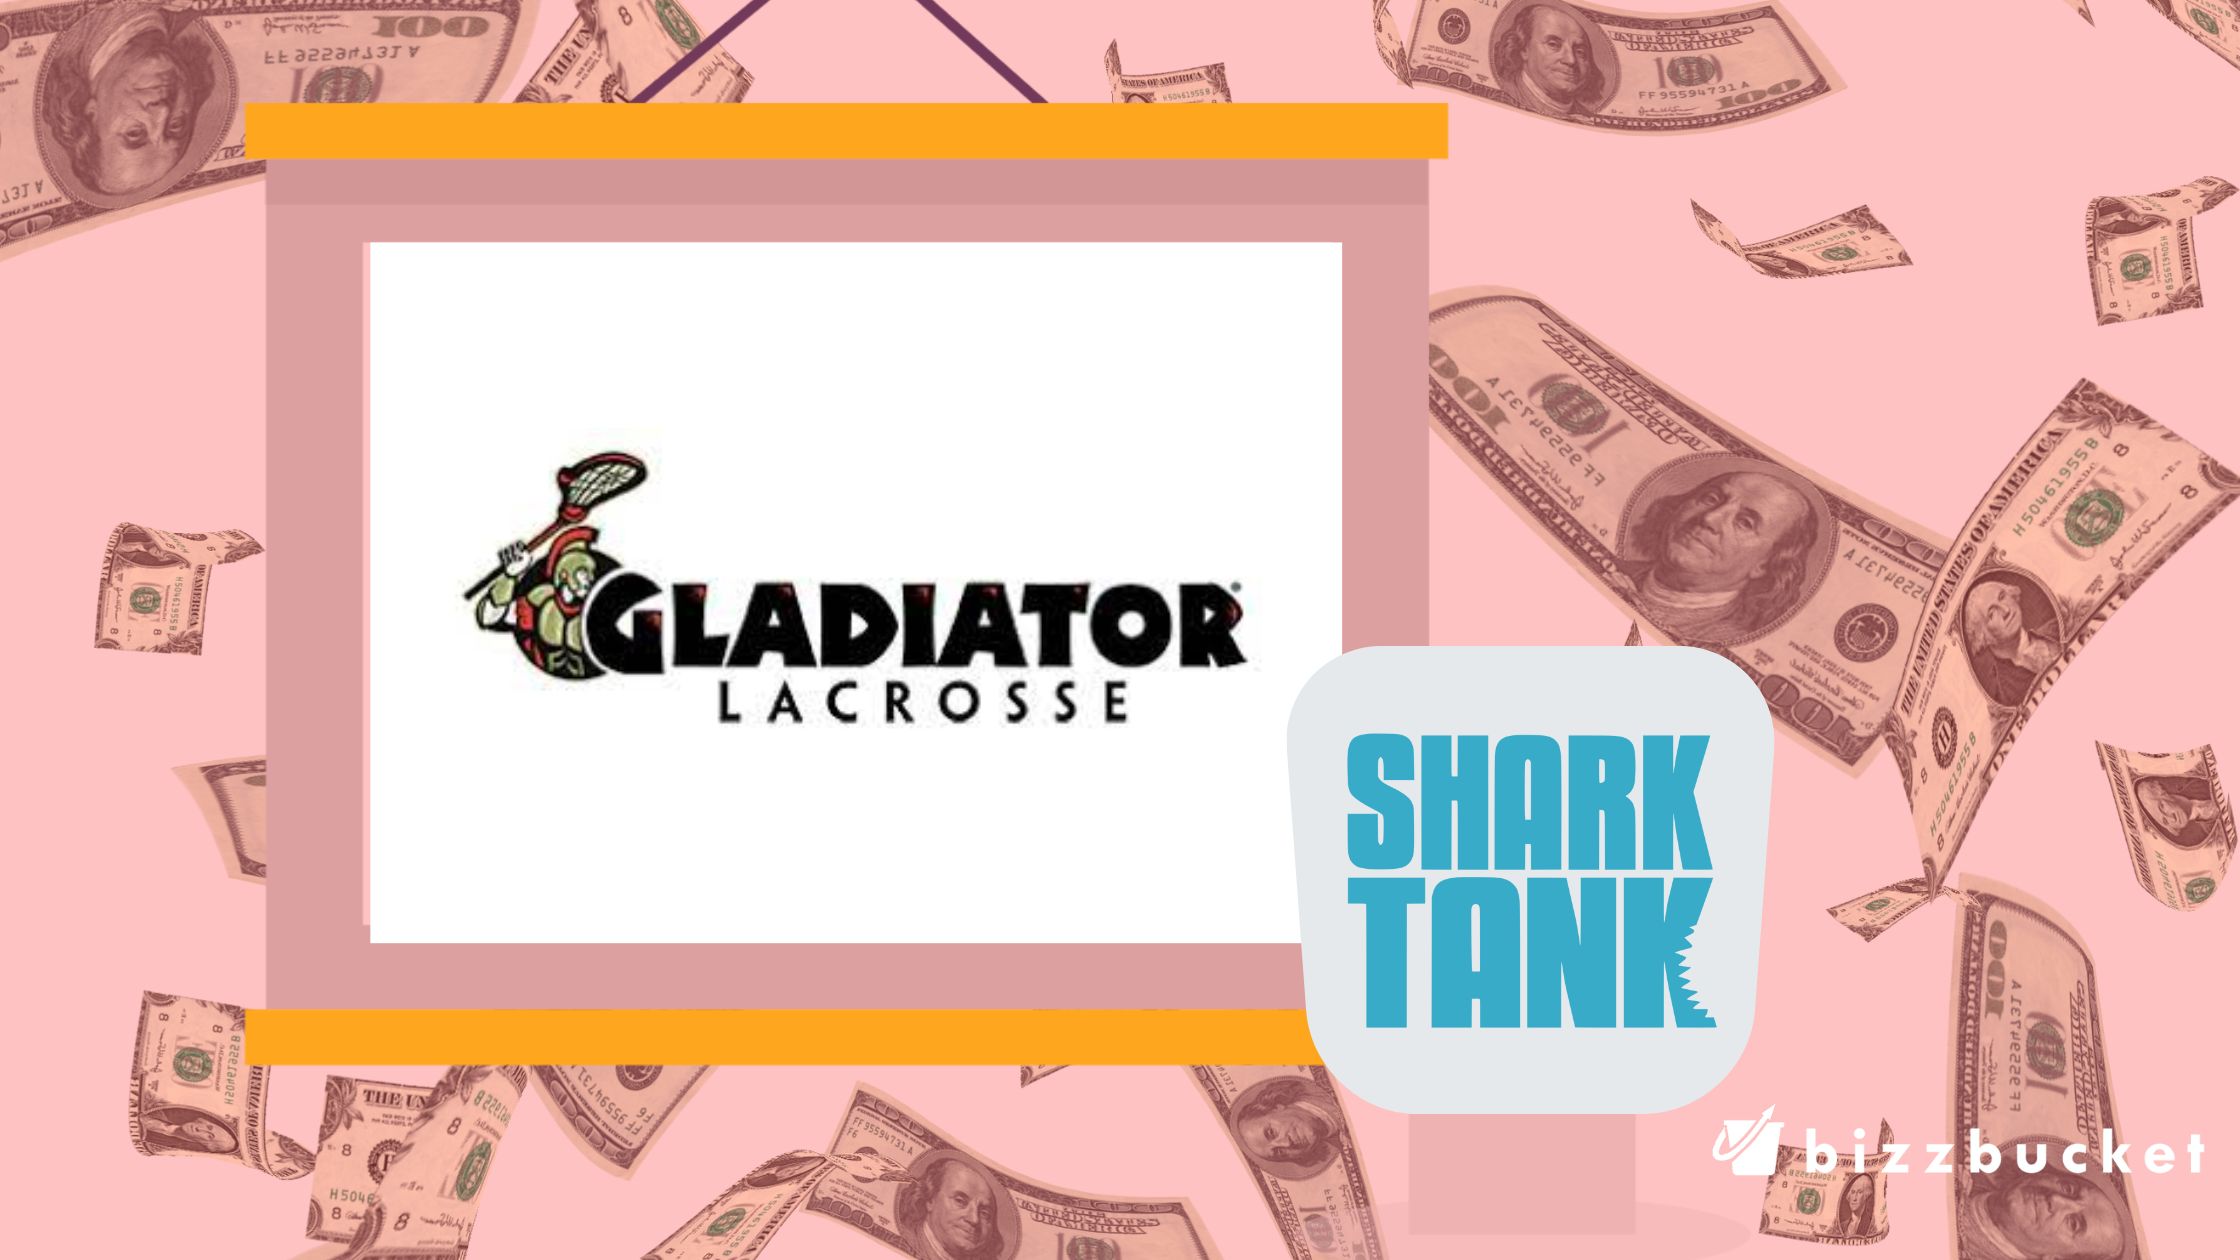 Gladiator Lacrosse shark tank